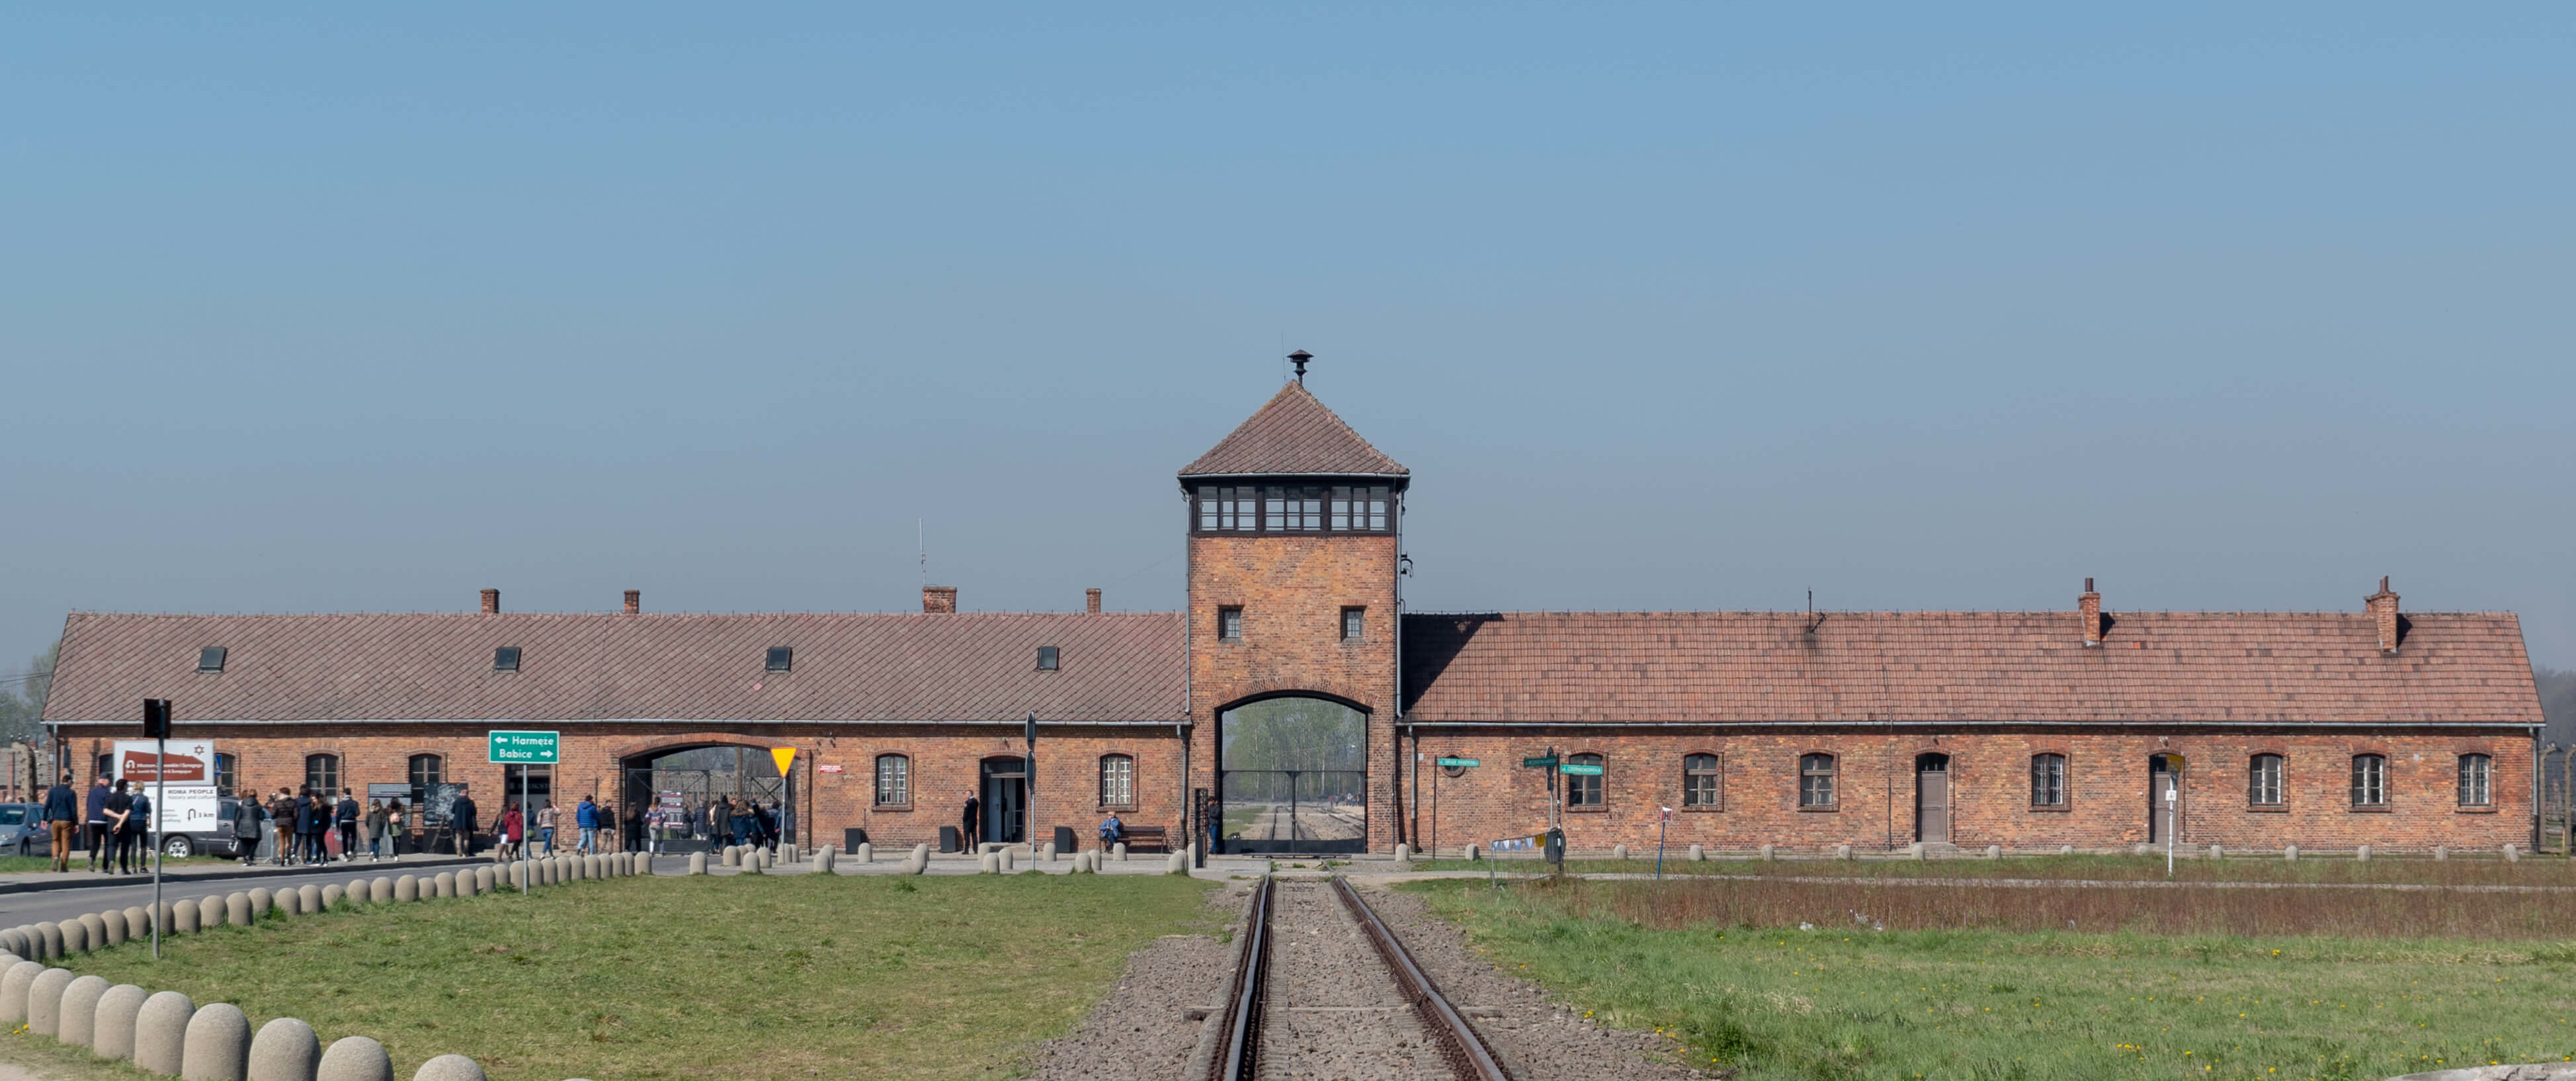 Auschwitz II - Birkenau Gate